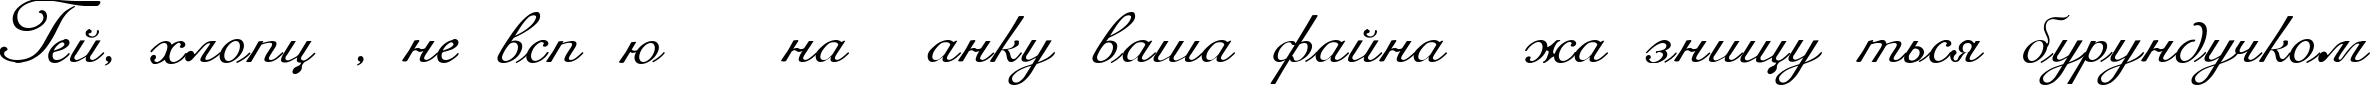 Пример написания шрифтом Romana Script текста на украинском